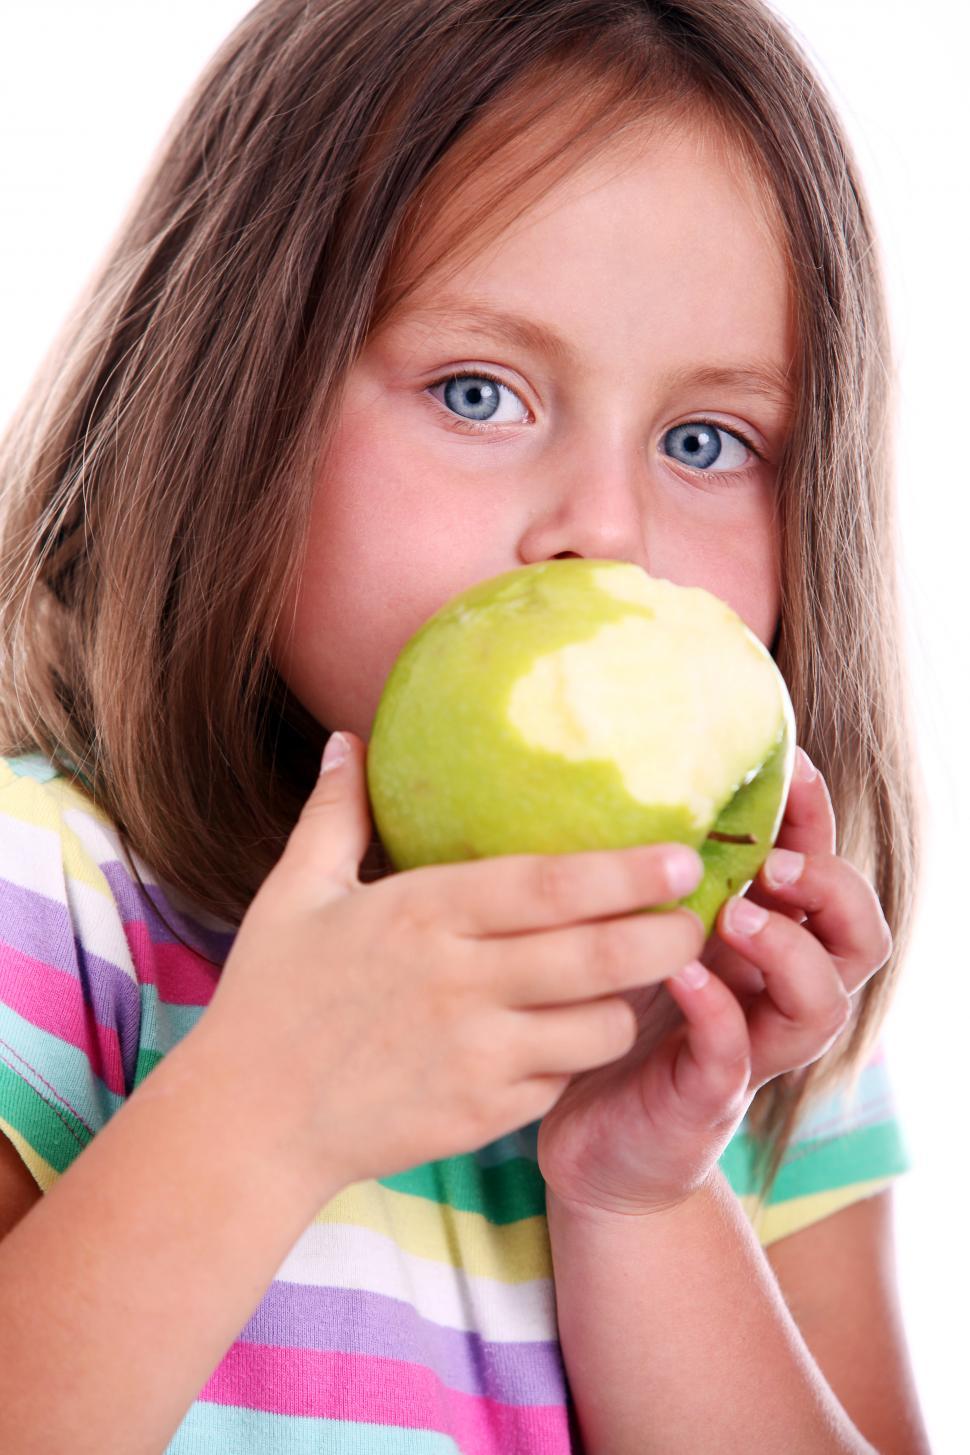 Free Image of Kid eating an apple 